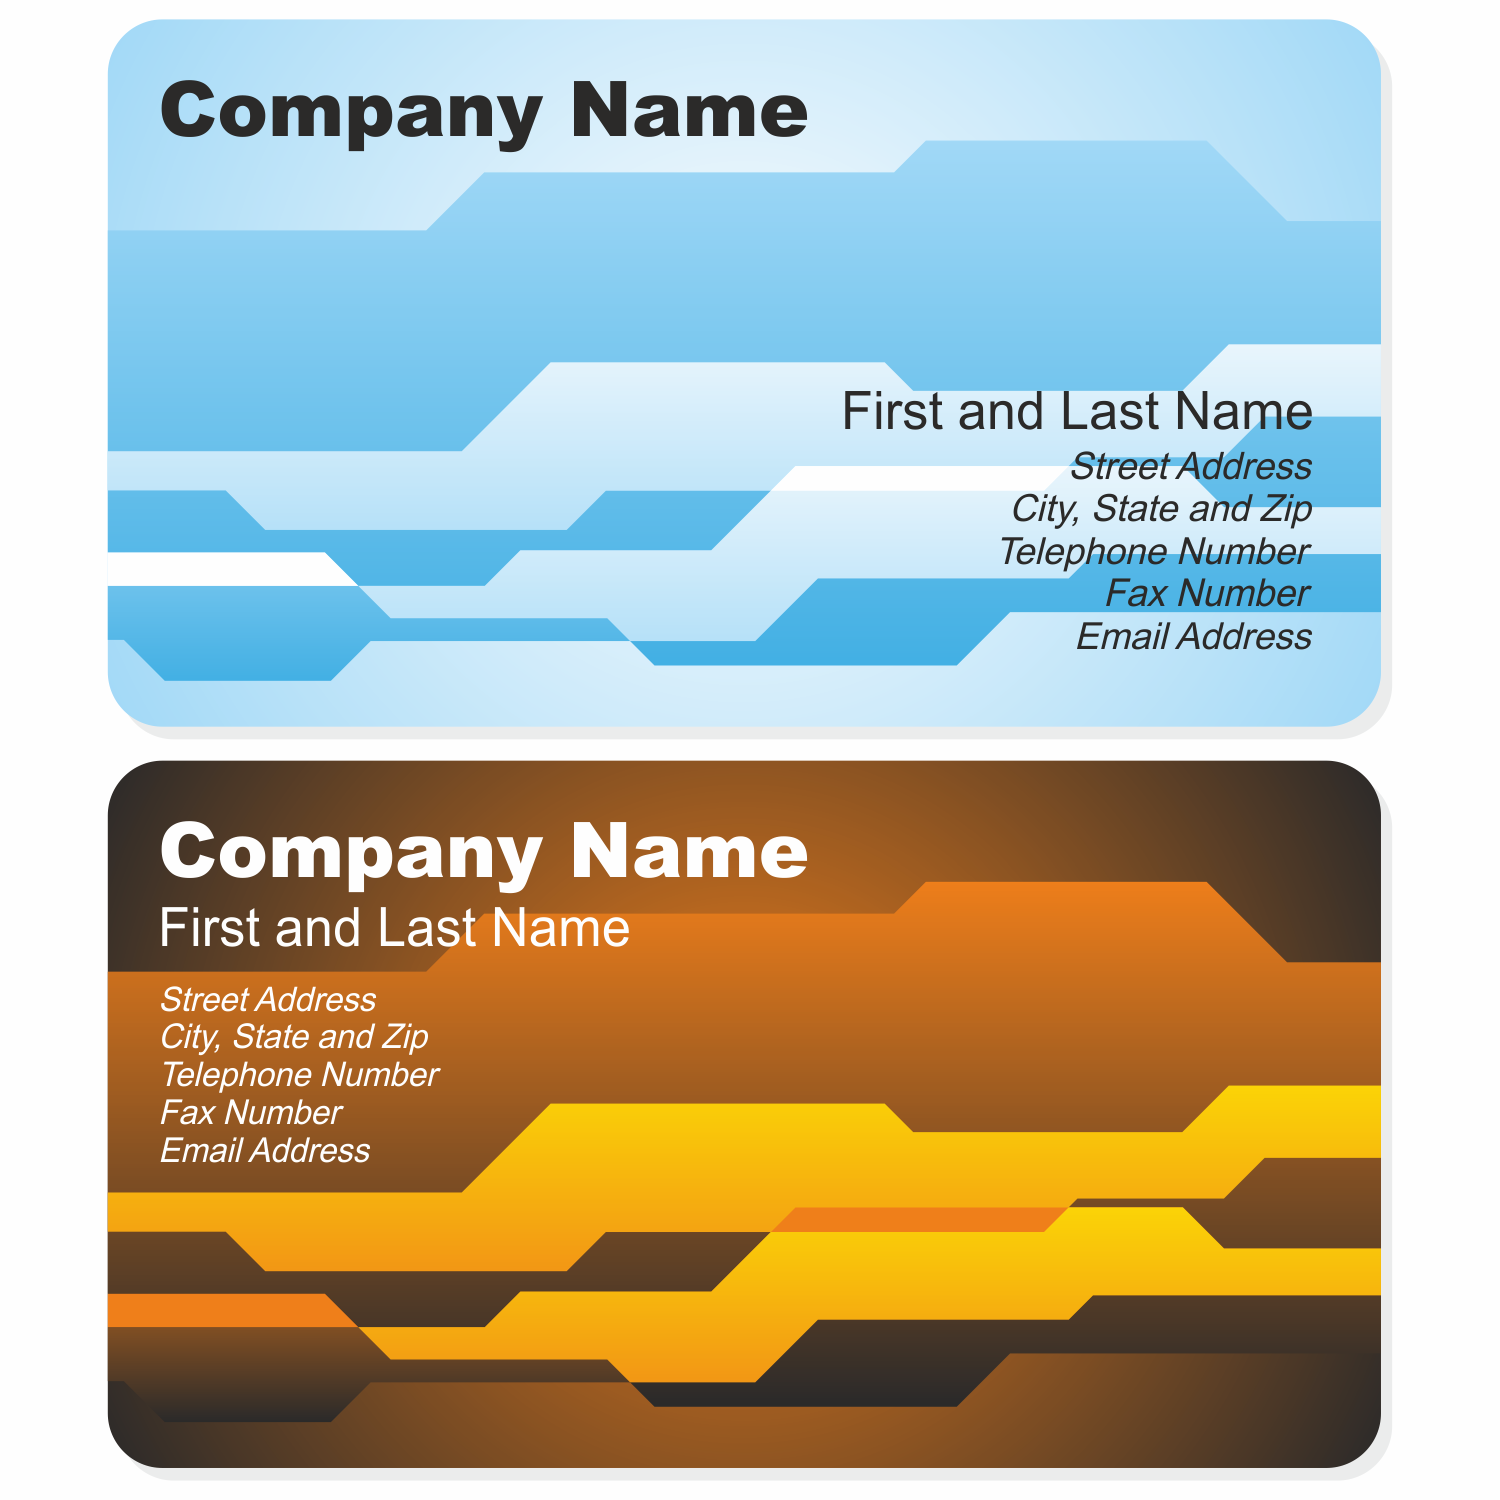 Corporate business card template